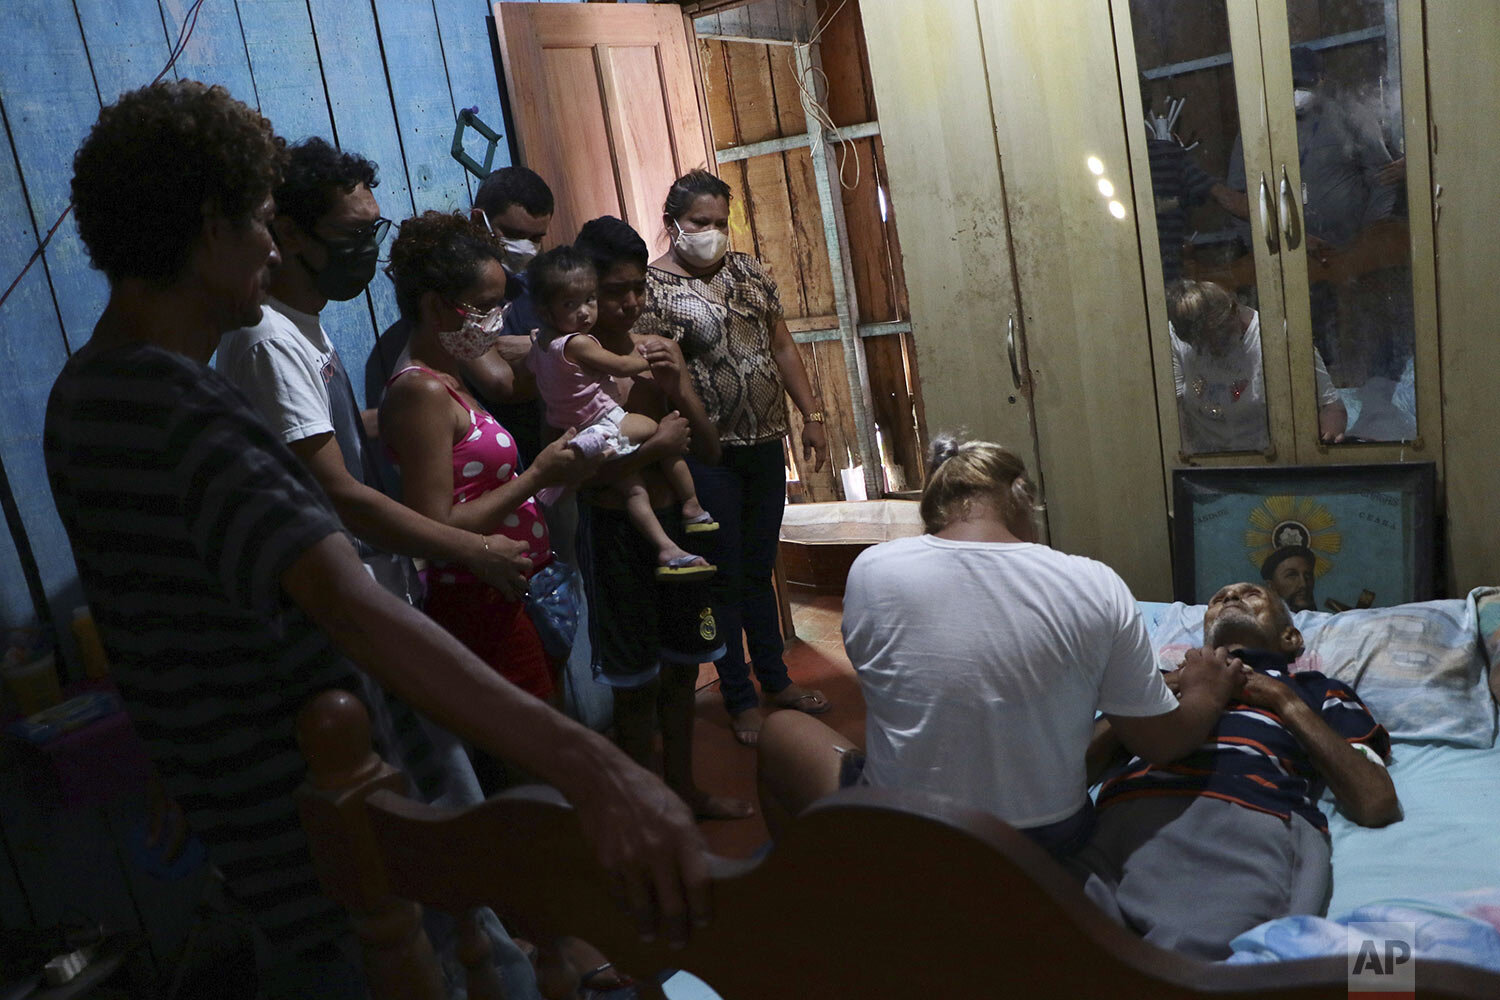  Relatives gather around the body of Raimundo Costa do Nascimento, 86, who died in his home of pneumonia, amid the new coronavirus pandemic at the Sao Jorge neighborhood in Manaus, Brazil, April 30, 2020. (AP Photo/Edmar Barros) 